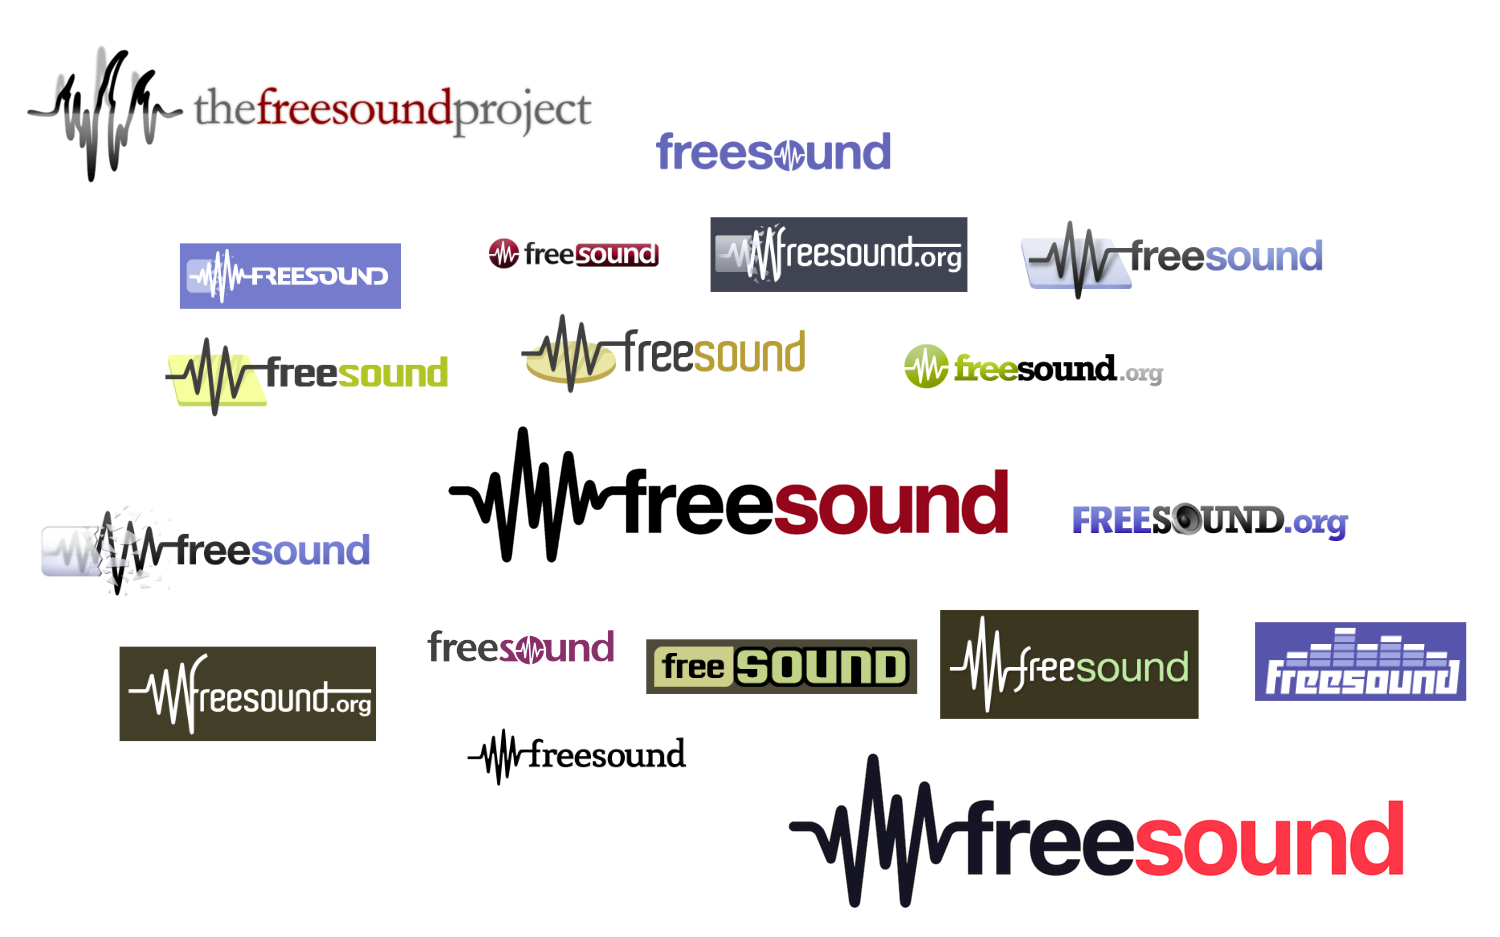 Freesound org. Freesound Live. Freesound logo.